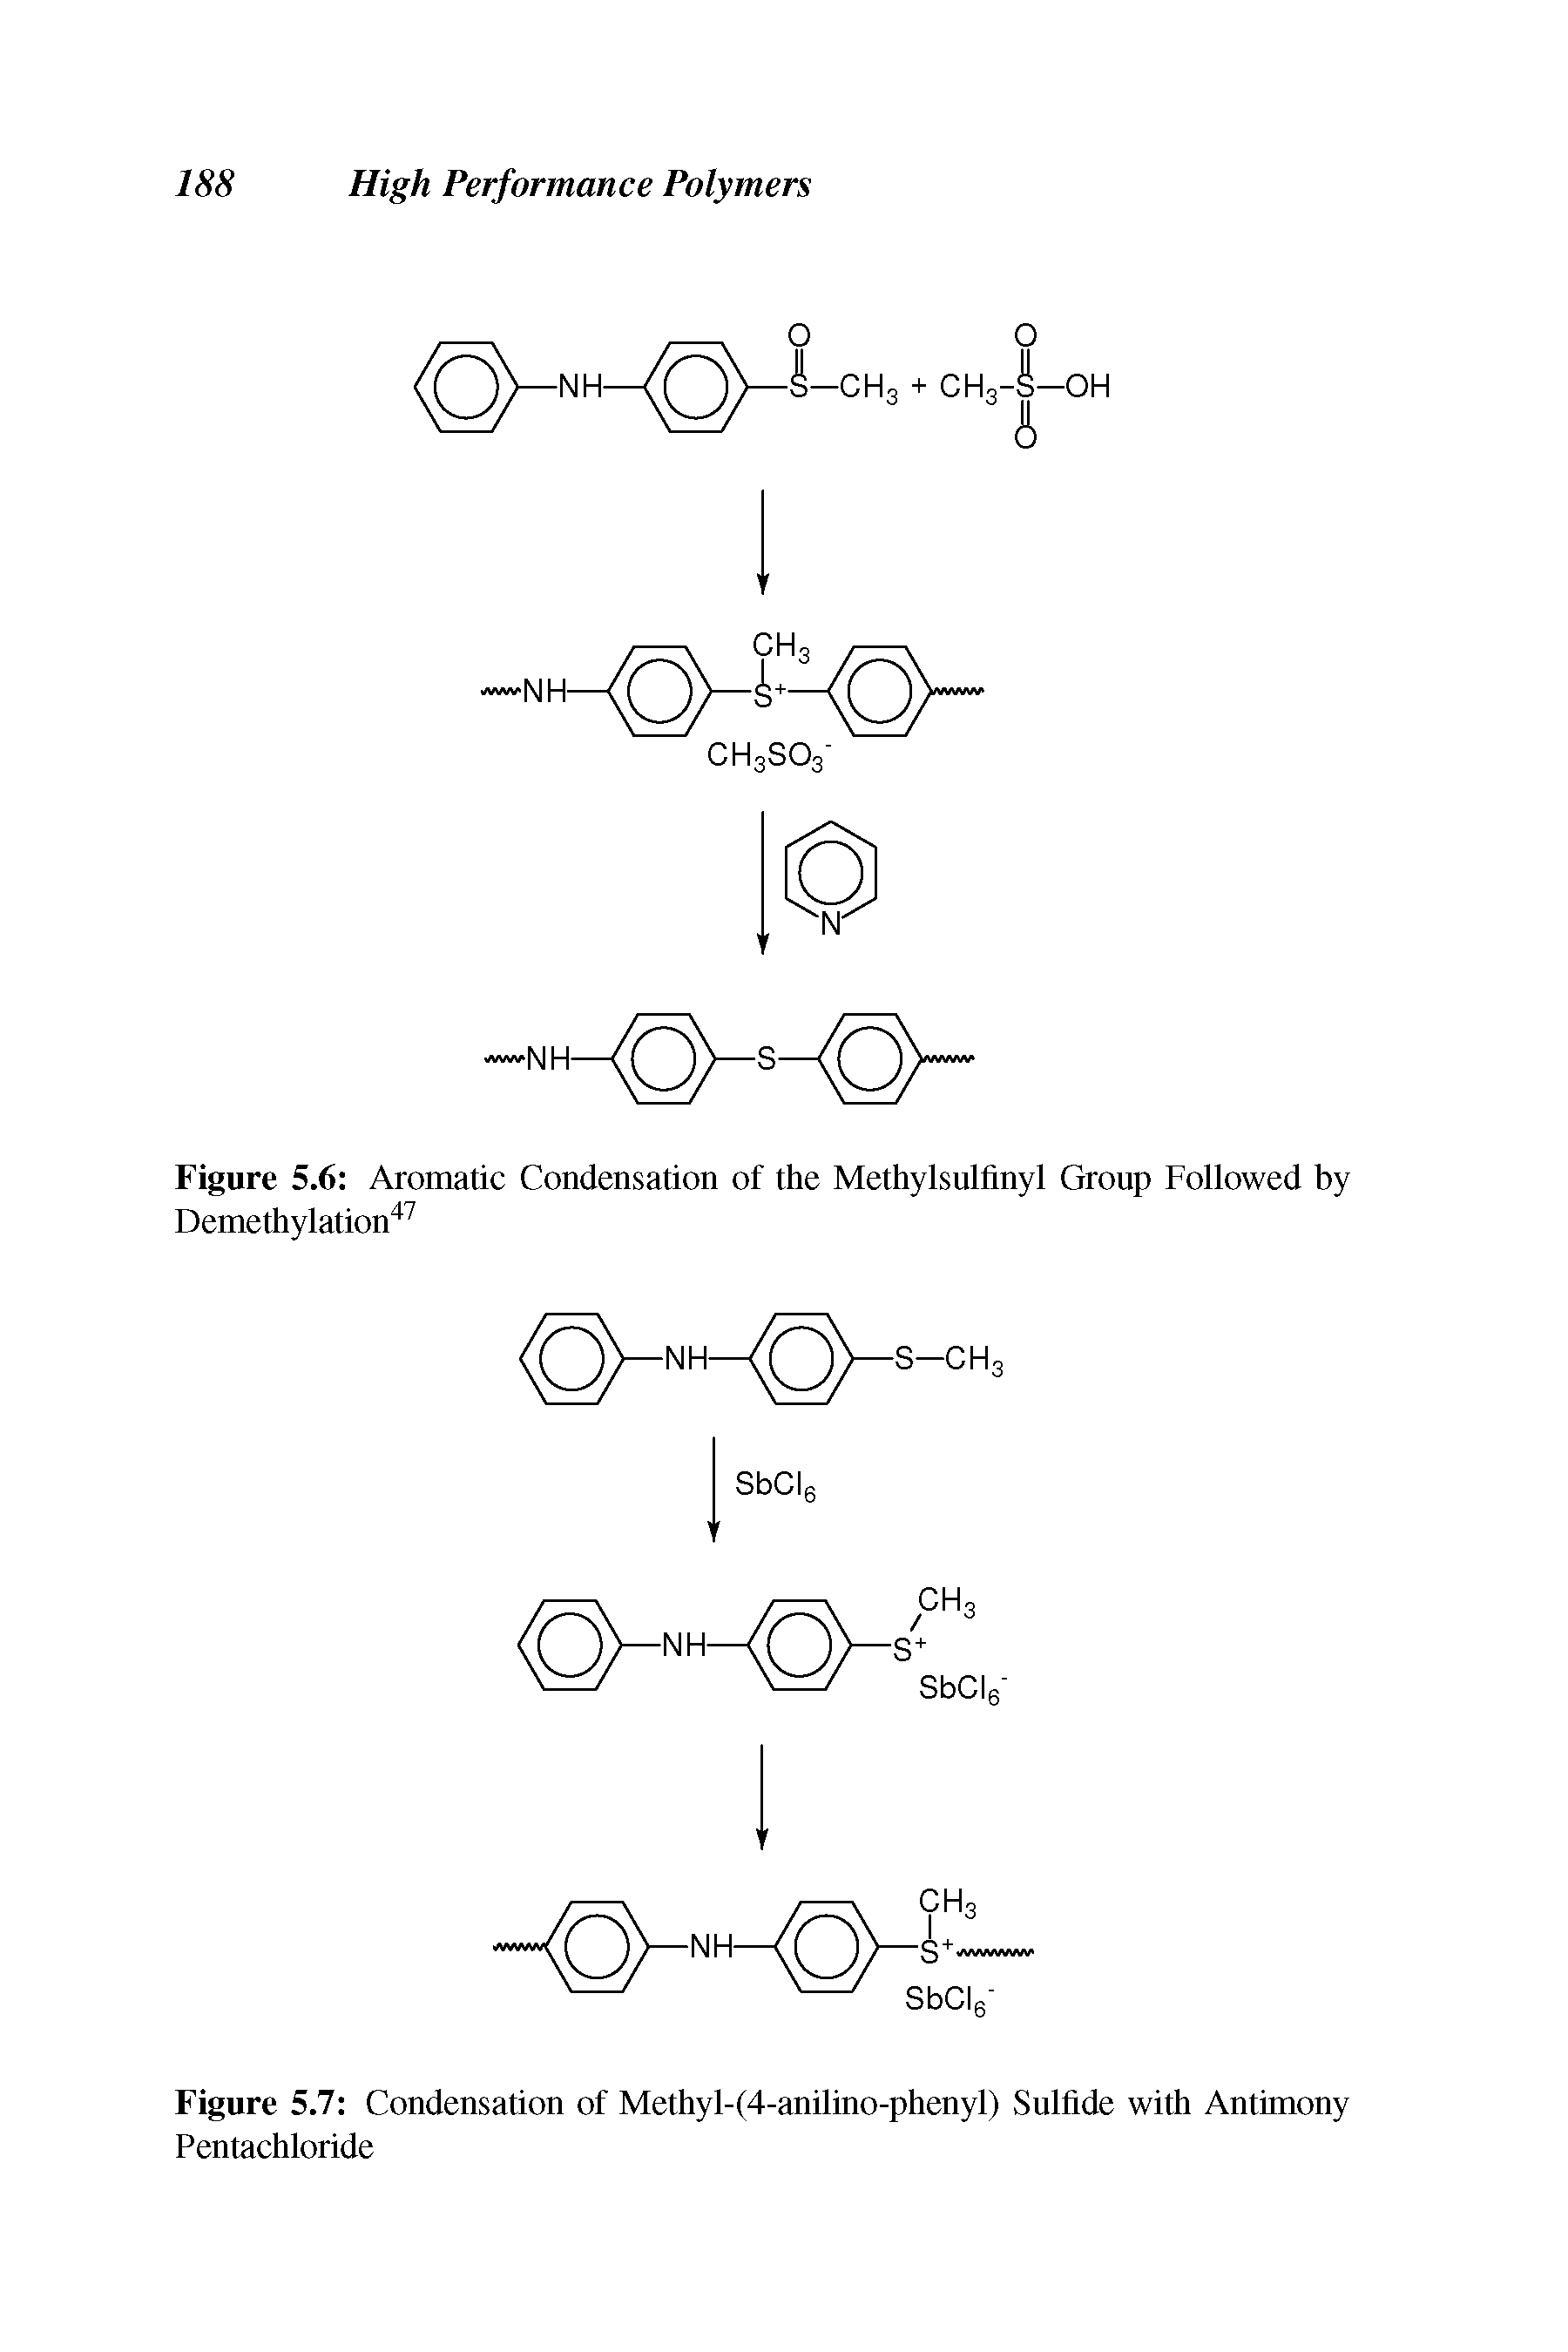 Figure 5.7 Condensation of Methyl-(4-anilino-phenyl) Snlfide with Antimony Pentachloride...